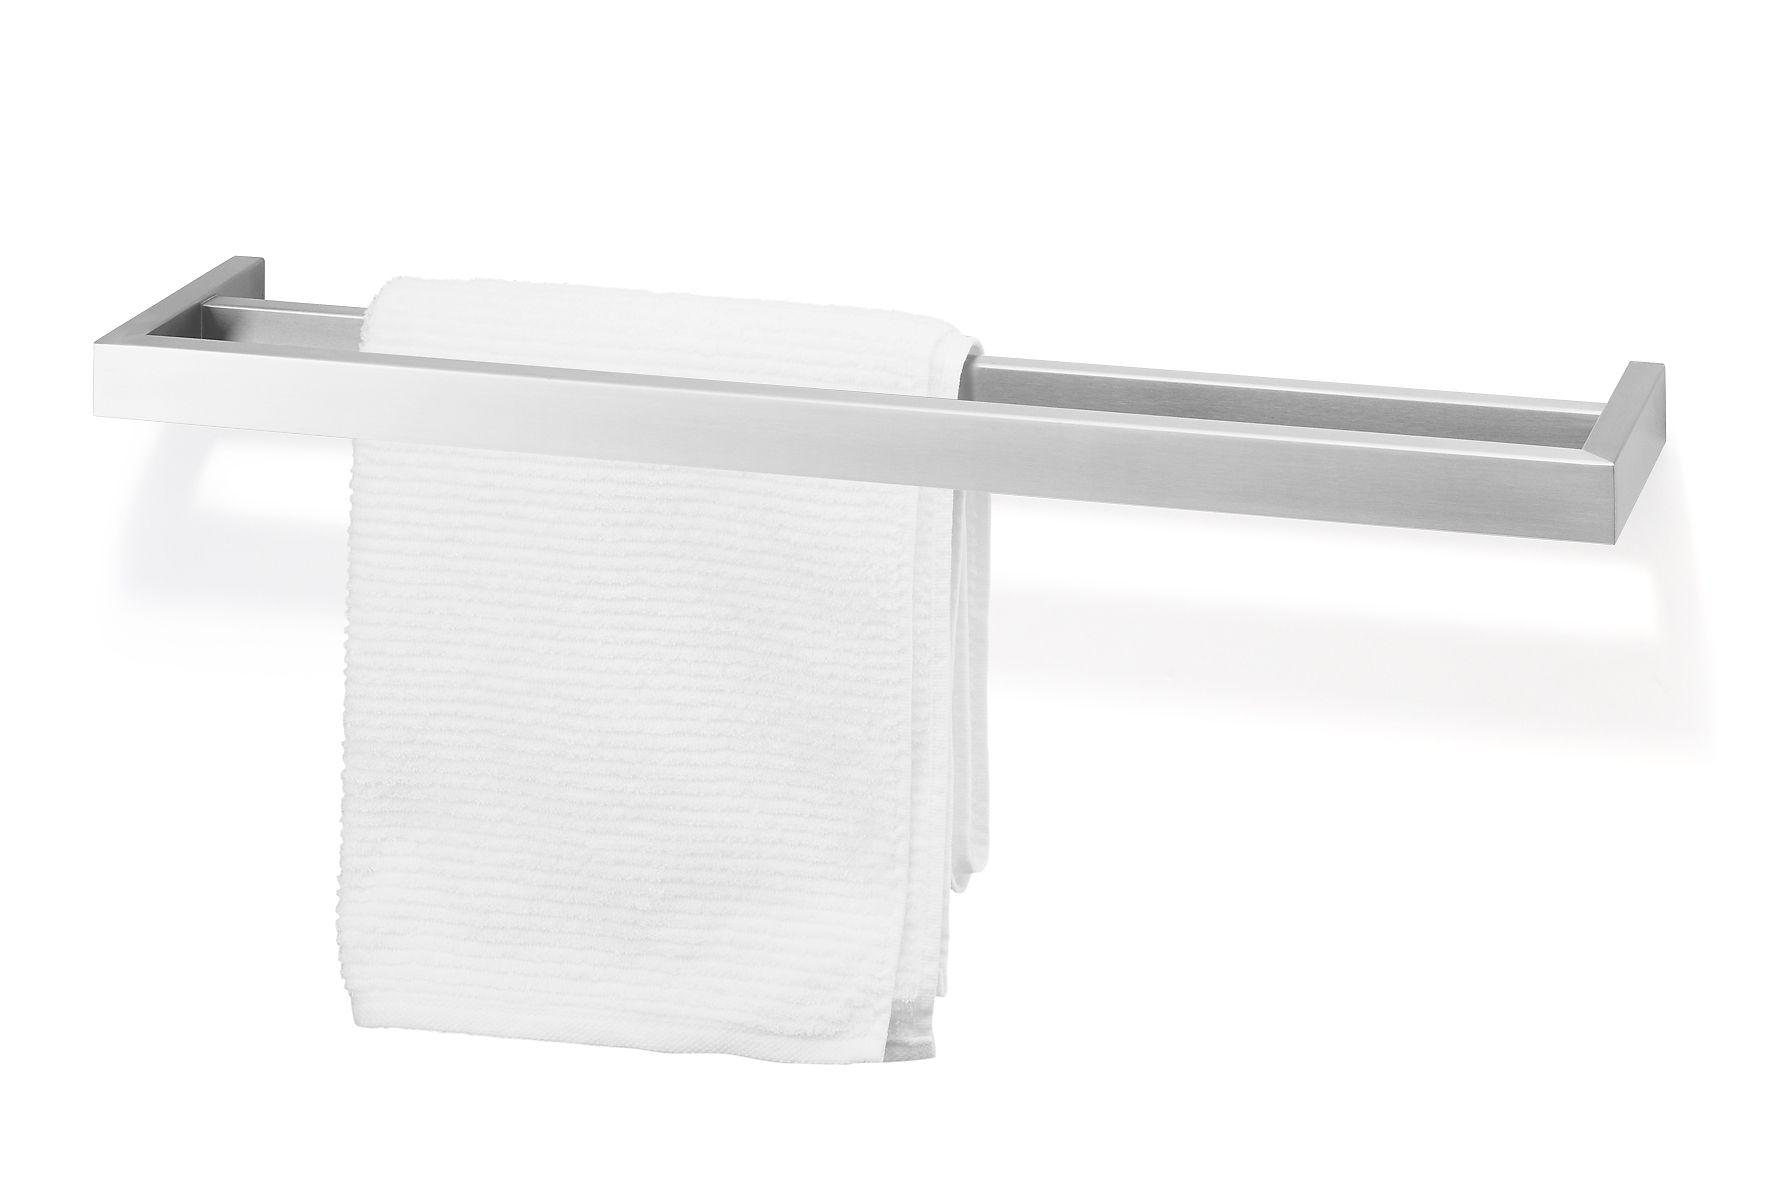 LINEA" double towel rail | LINEA series, stainless steel matte | Bathroom | Zack Germany